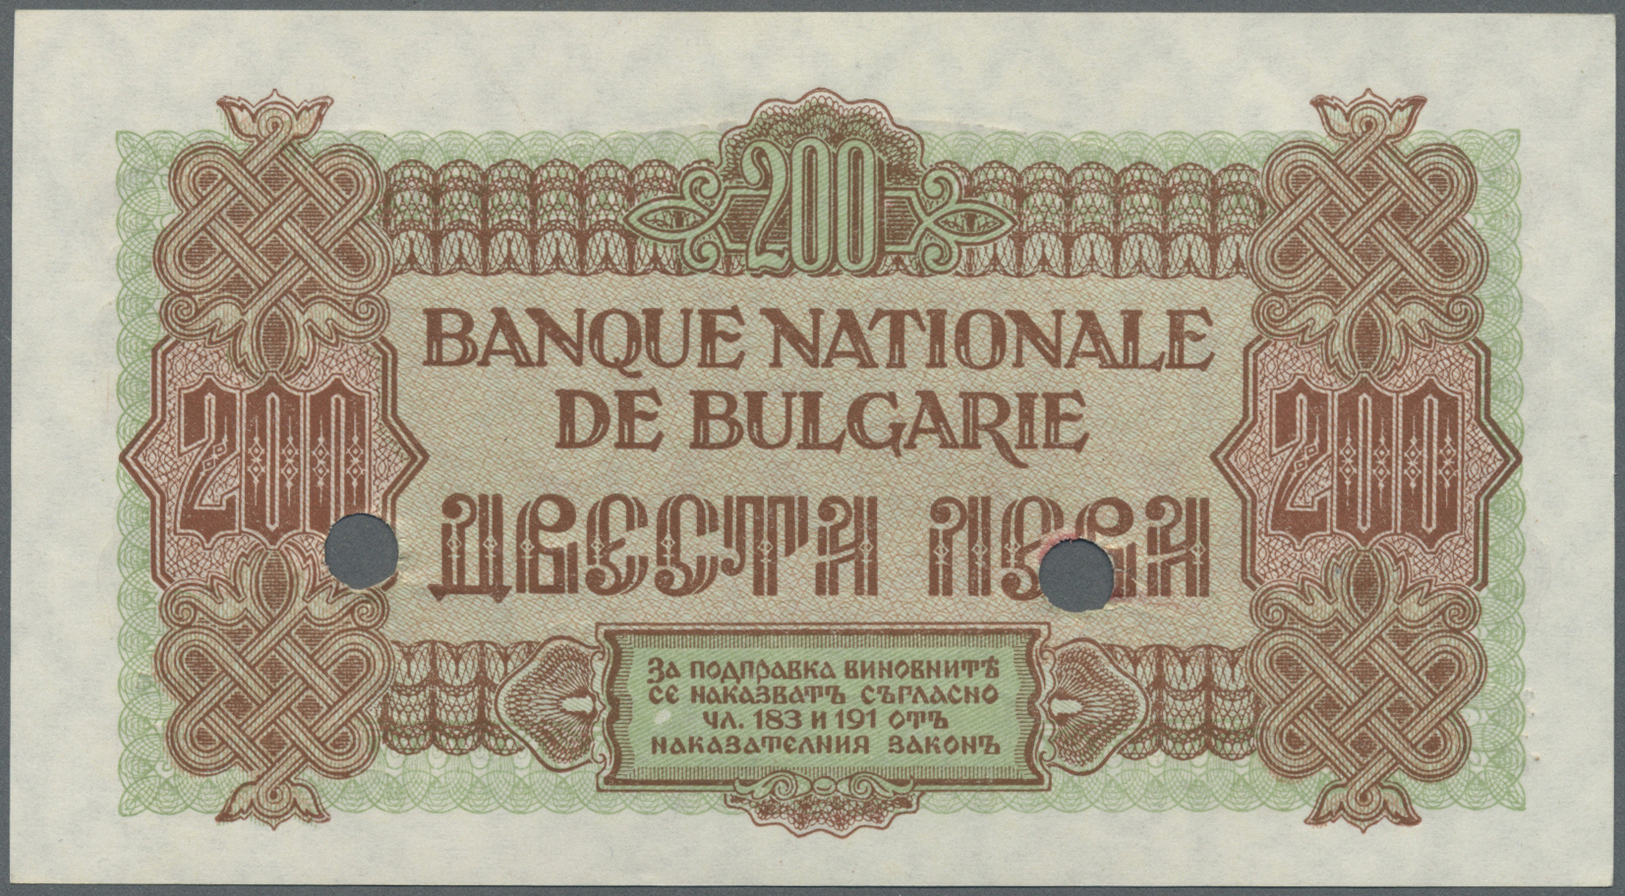 00427 Bulgaria / Bulgarien: 200 Leva 1945 Goznak Series With Russian Overprint SPECIMEN, P.69s With A Few Tiny Paper Irr - Bulgaria